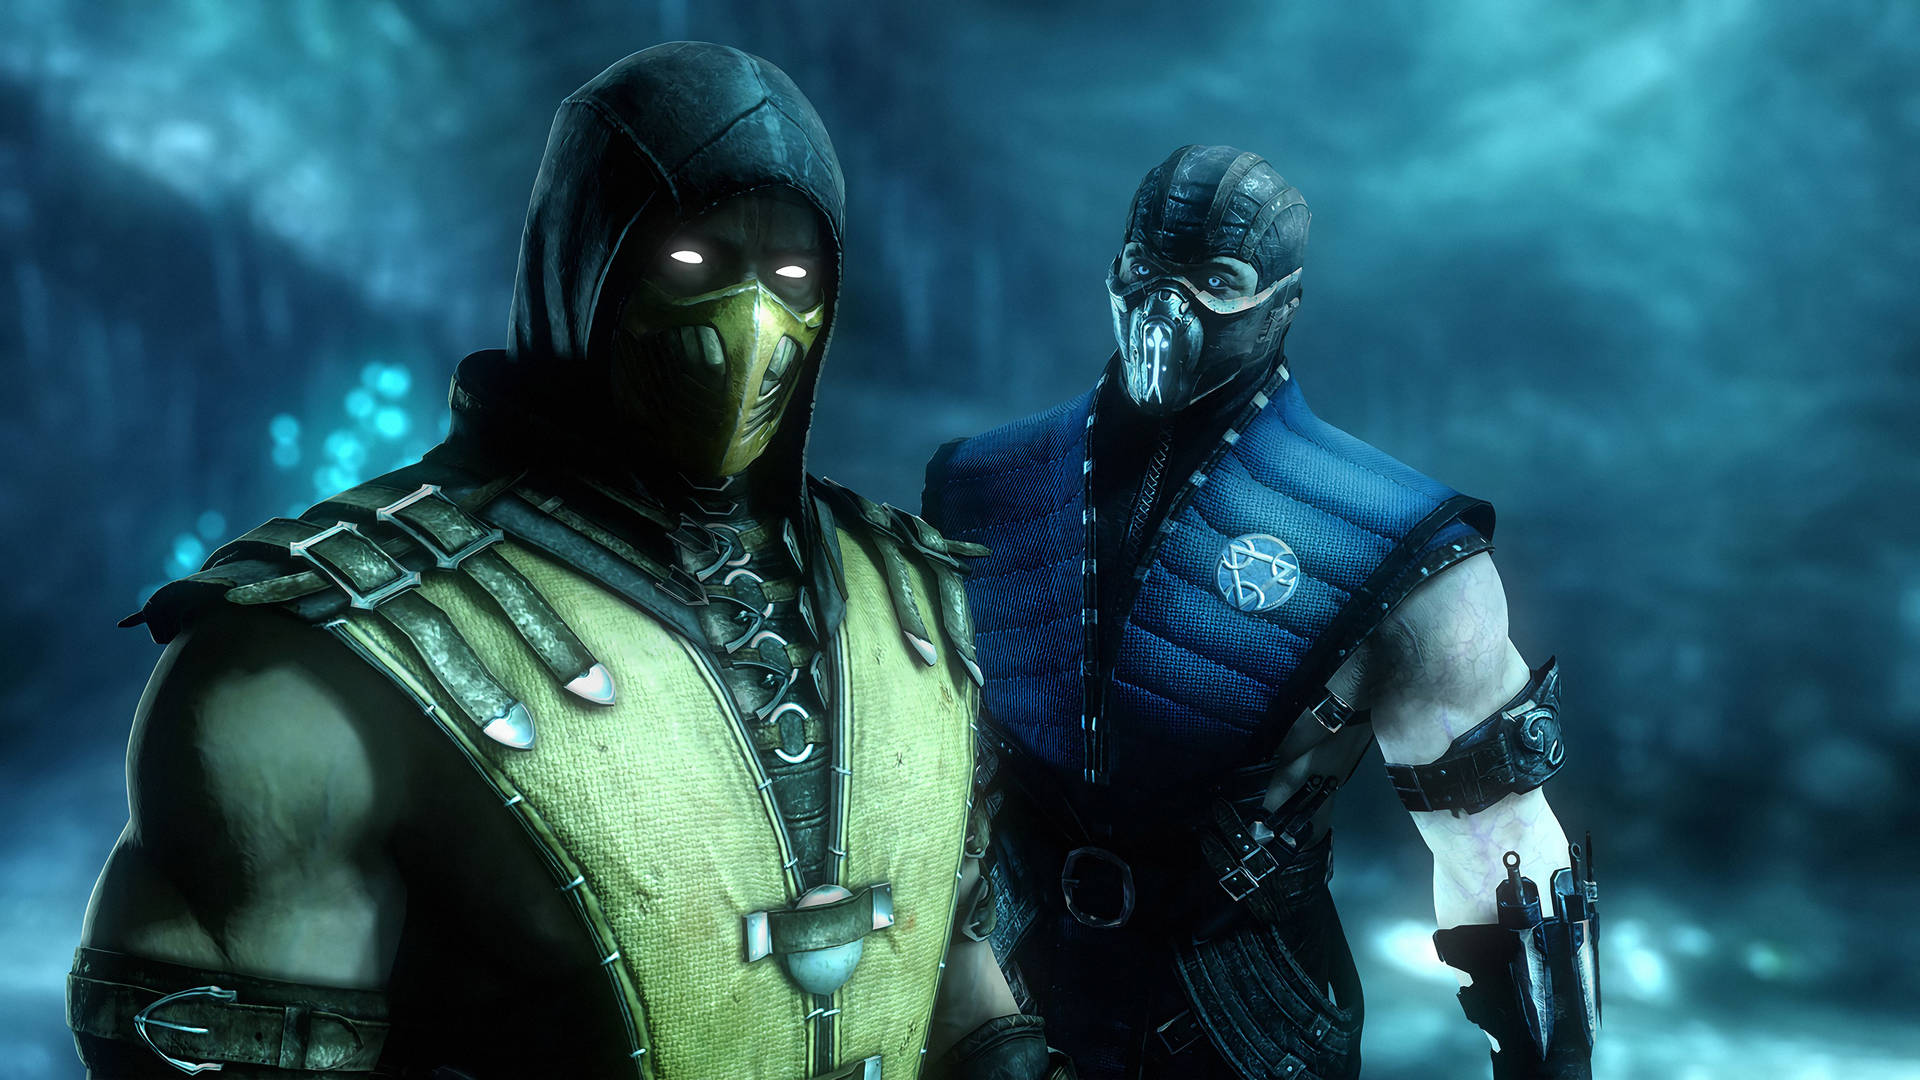 Mortal Kombat Scorpion Vs Sub Zero Together Background